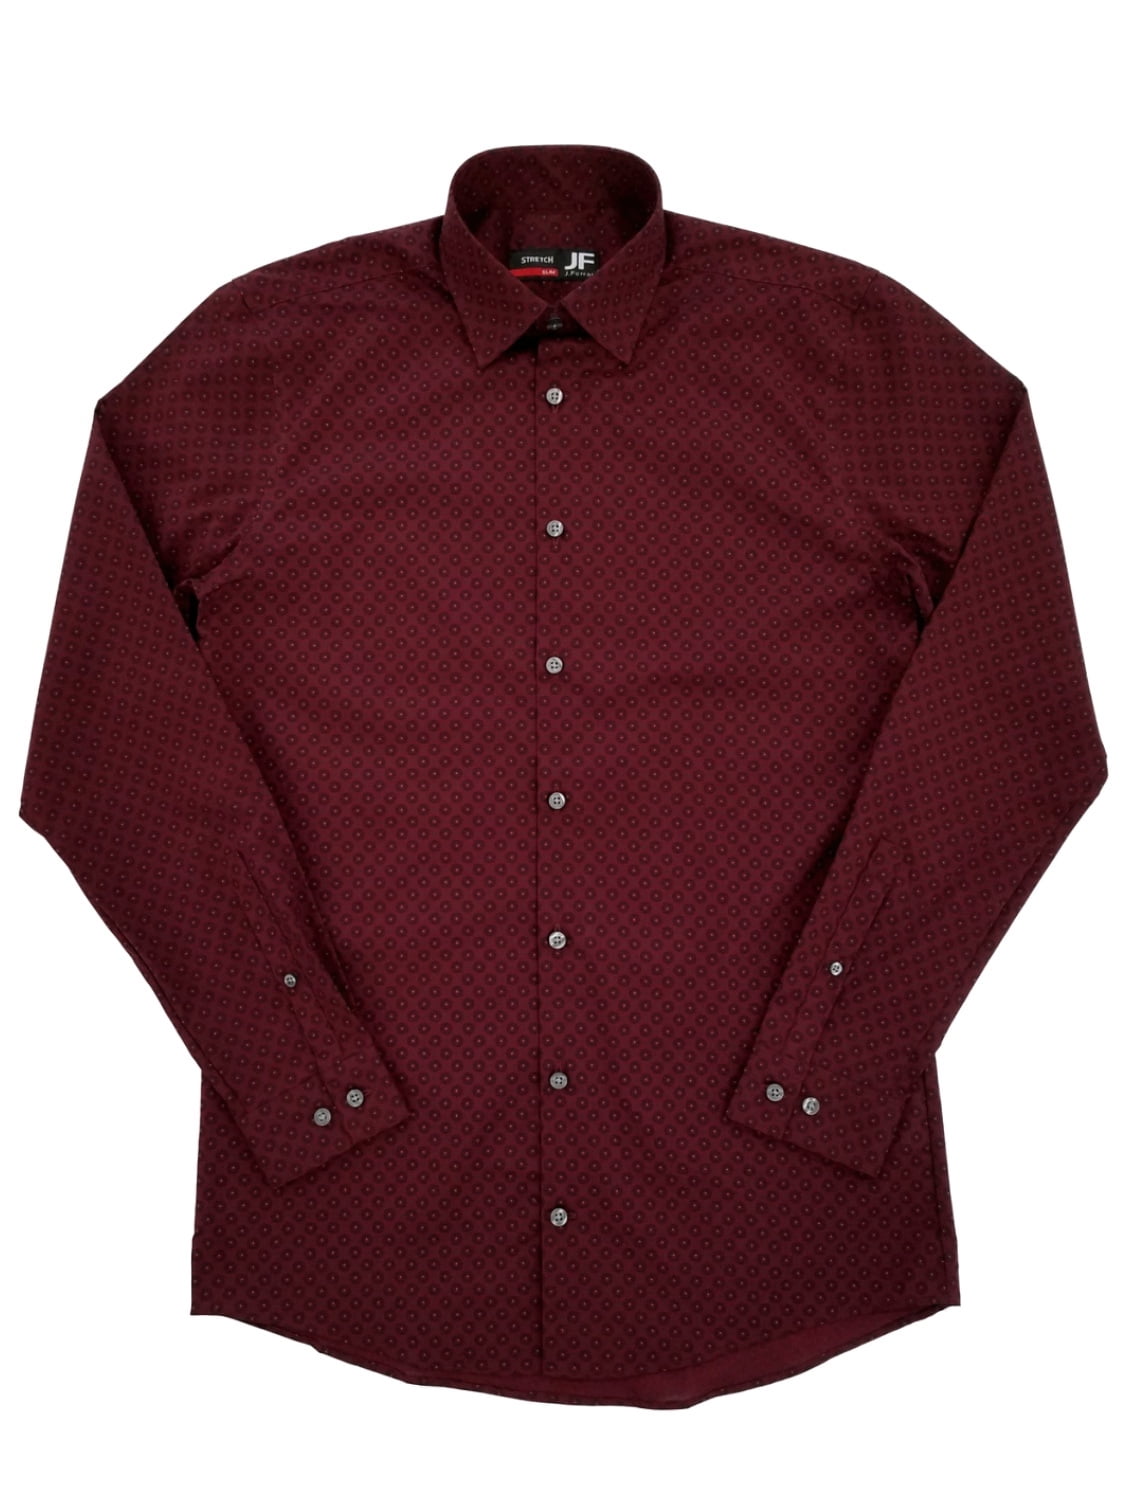 Details about   Men's ERIC SANA NWT Burgundy Damask Print Long Sleeve Dress Shirt SZ 18.5 